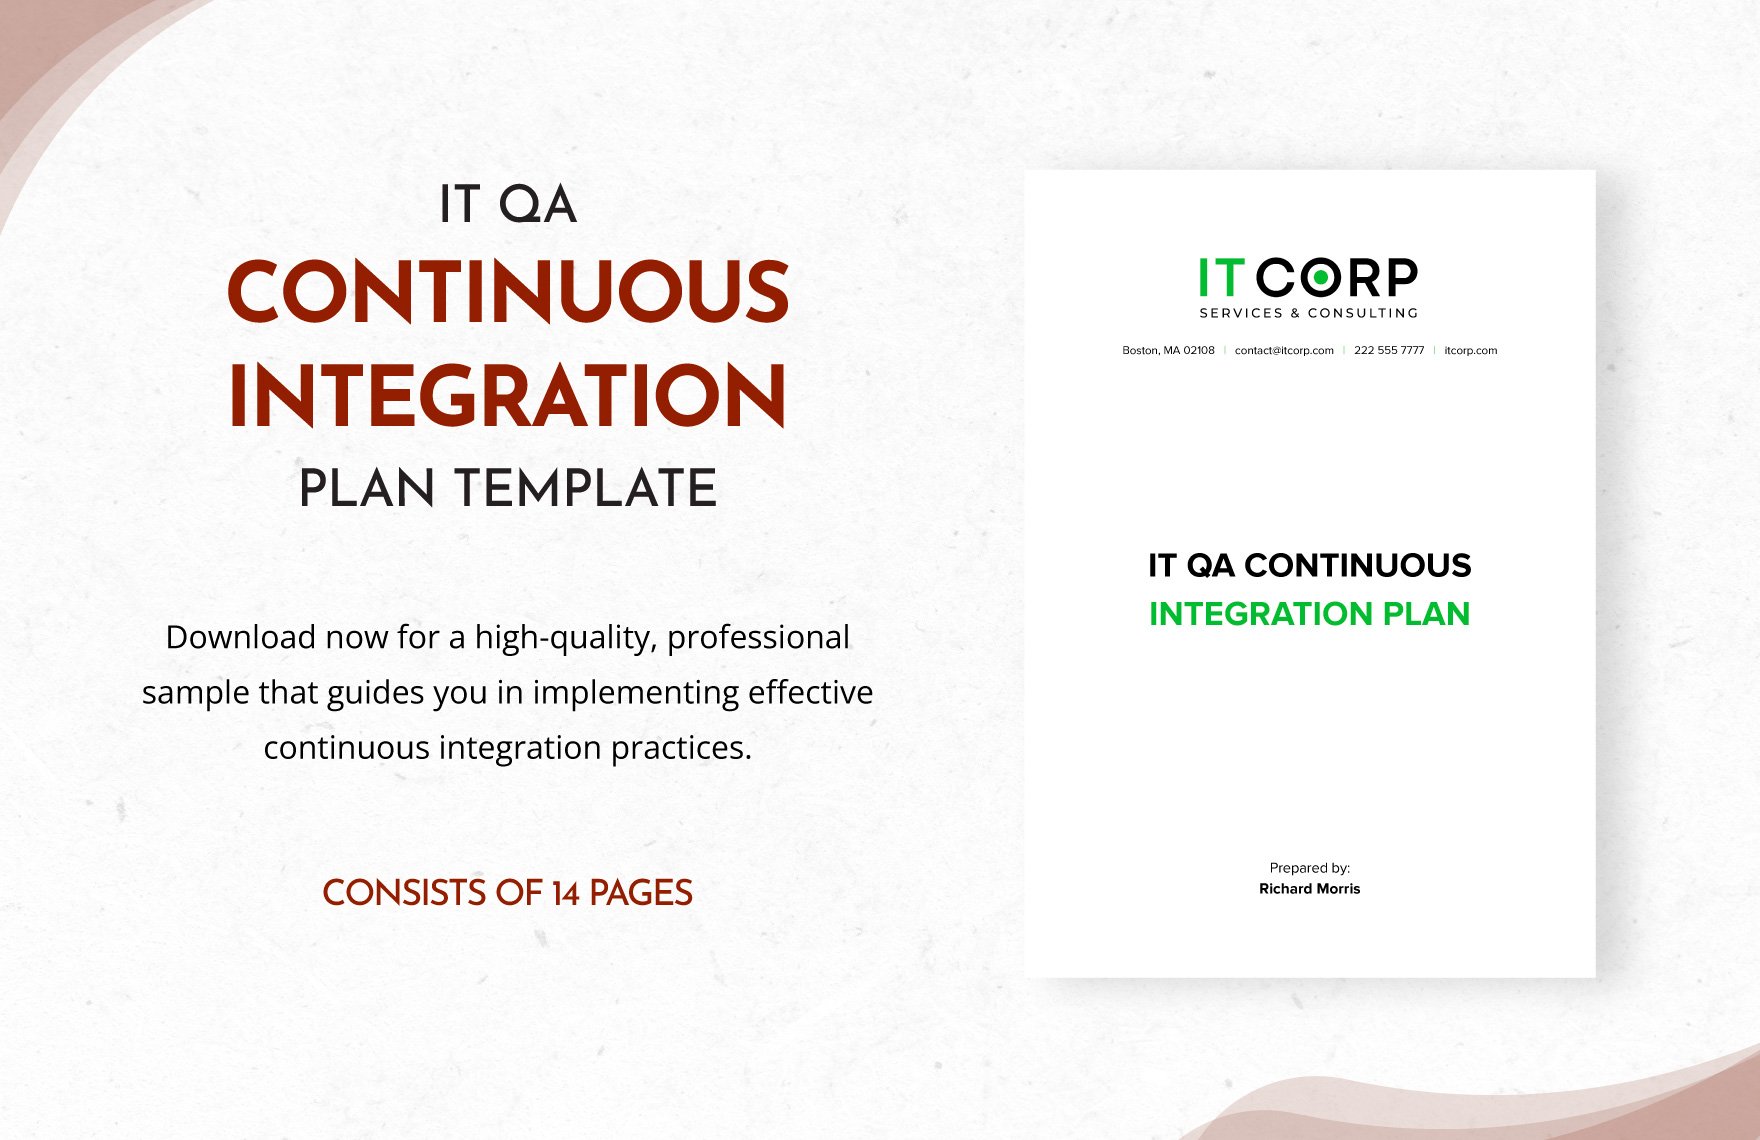 IT QA Continuous Integration Plan Template